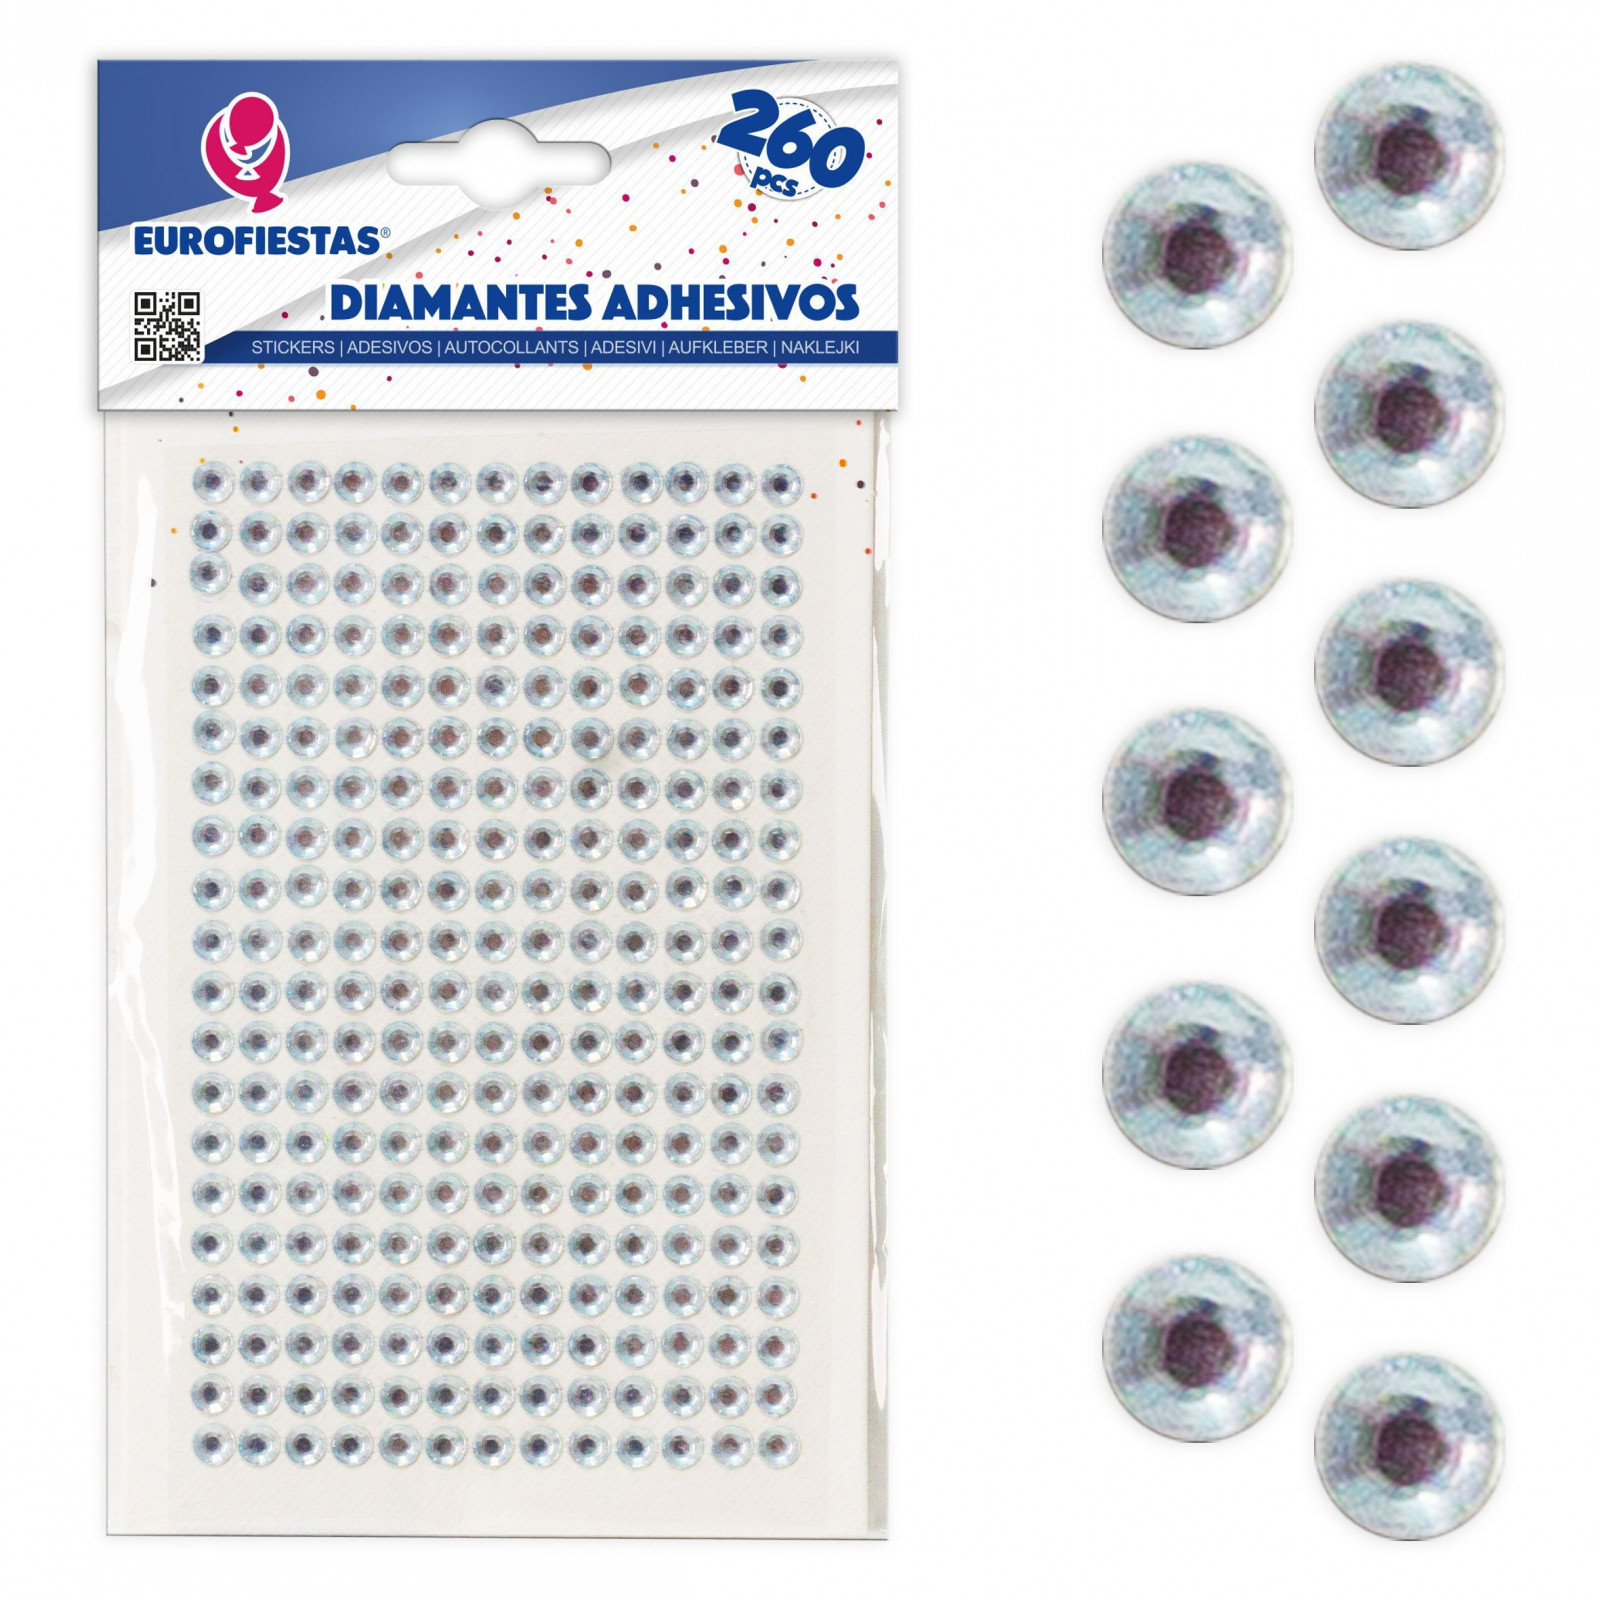 260 diamantes adhesivos med plata